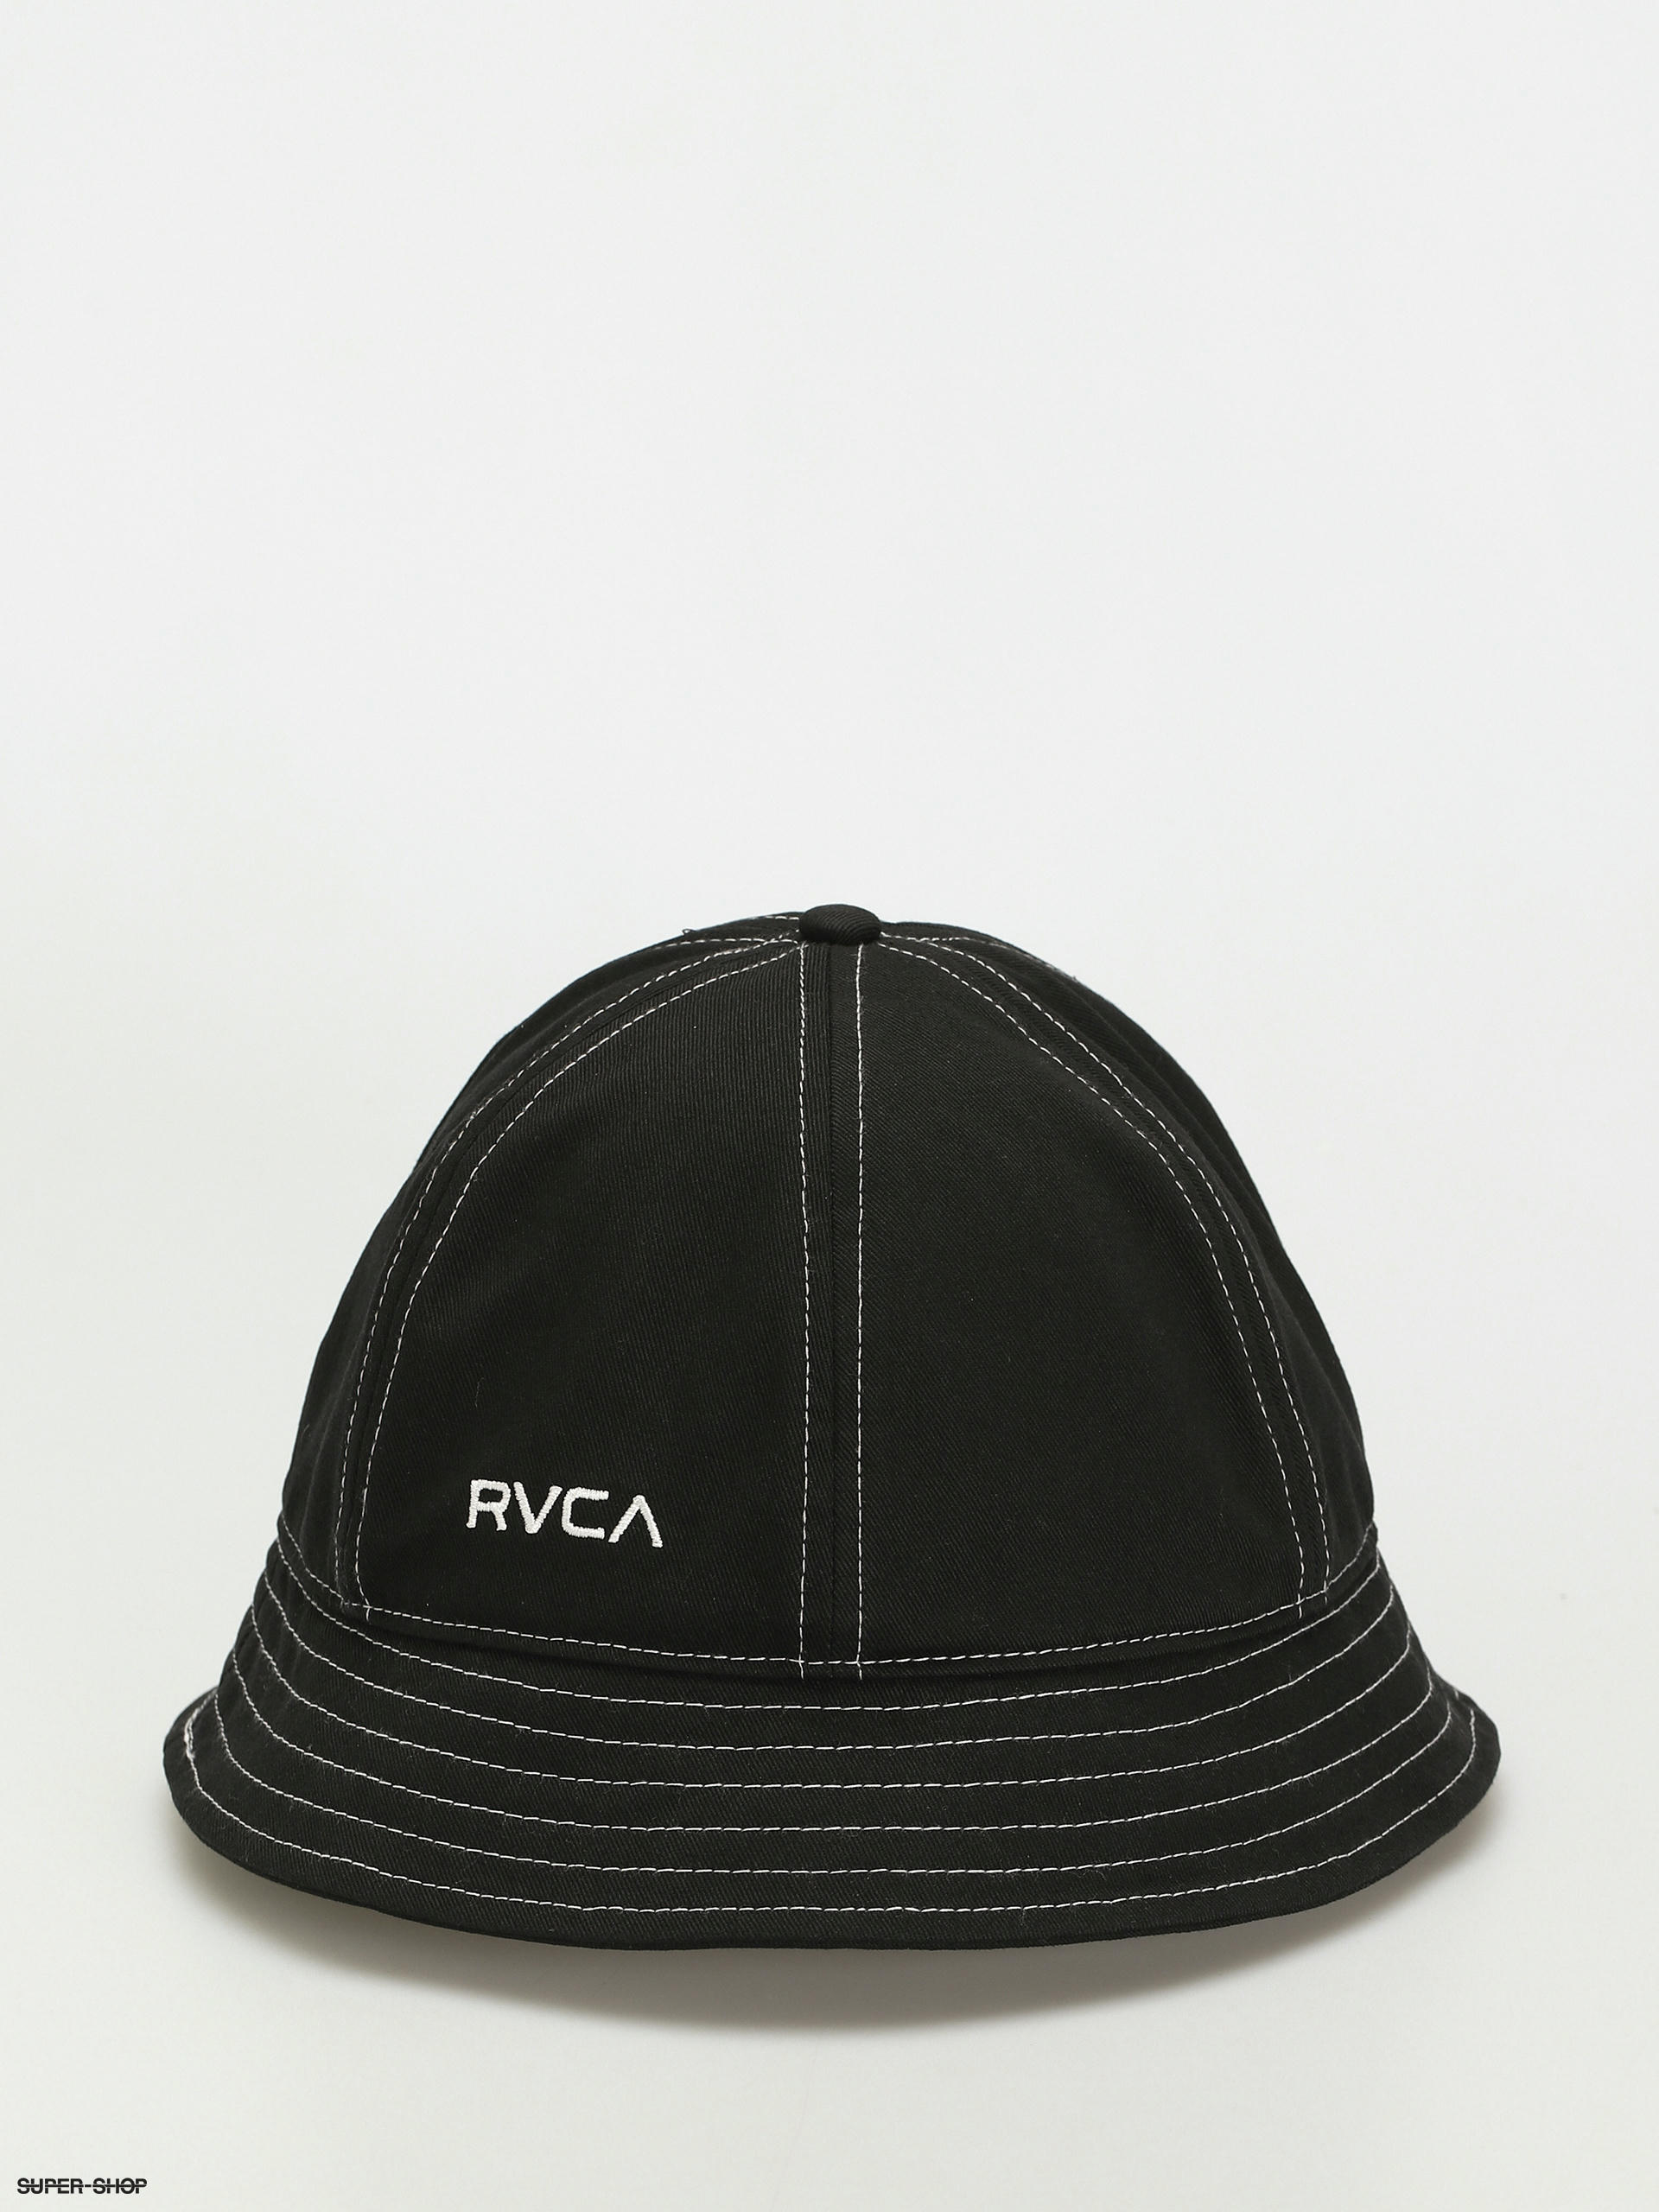 RVCA Throwing Shade Hat Wmn (rvca black)